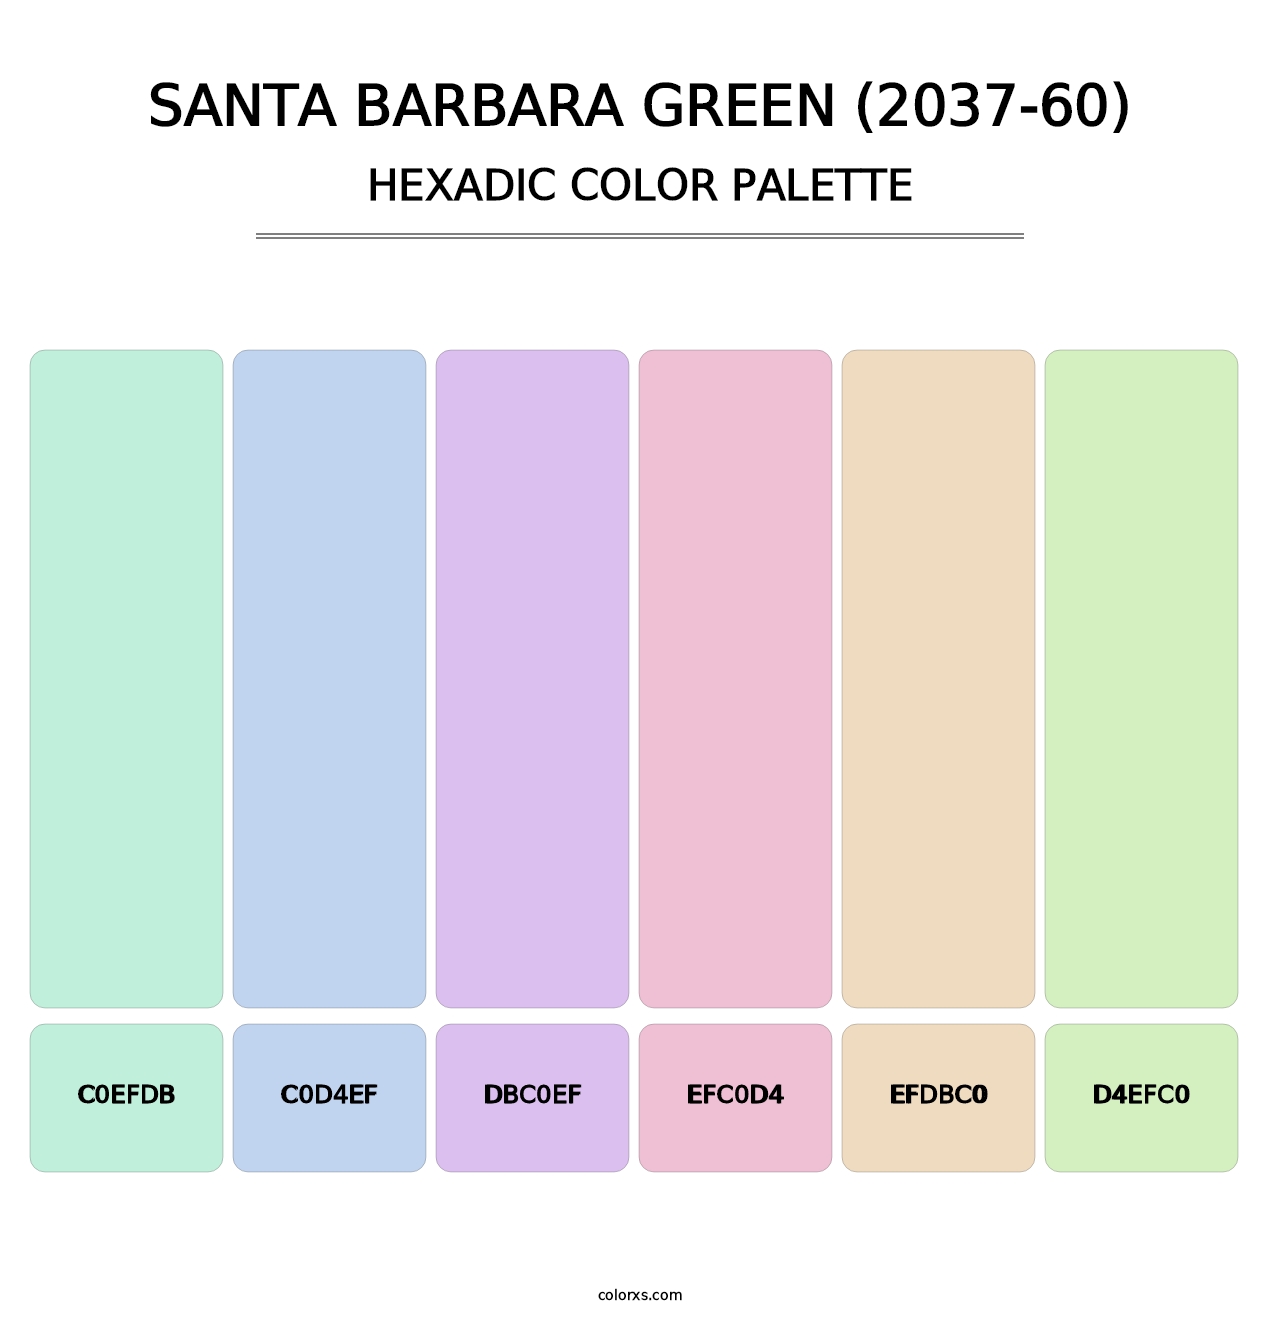 Santa Barbara Green (2037-60) - Hexadic Color Palette